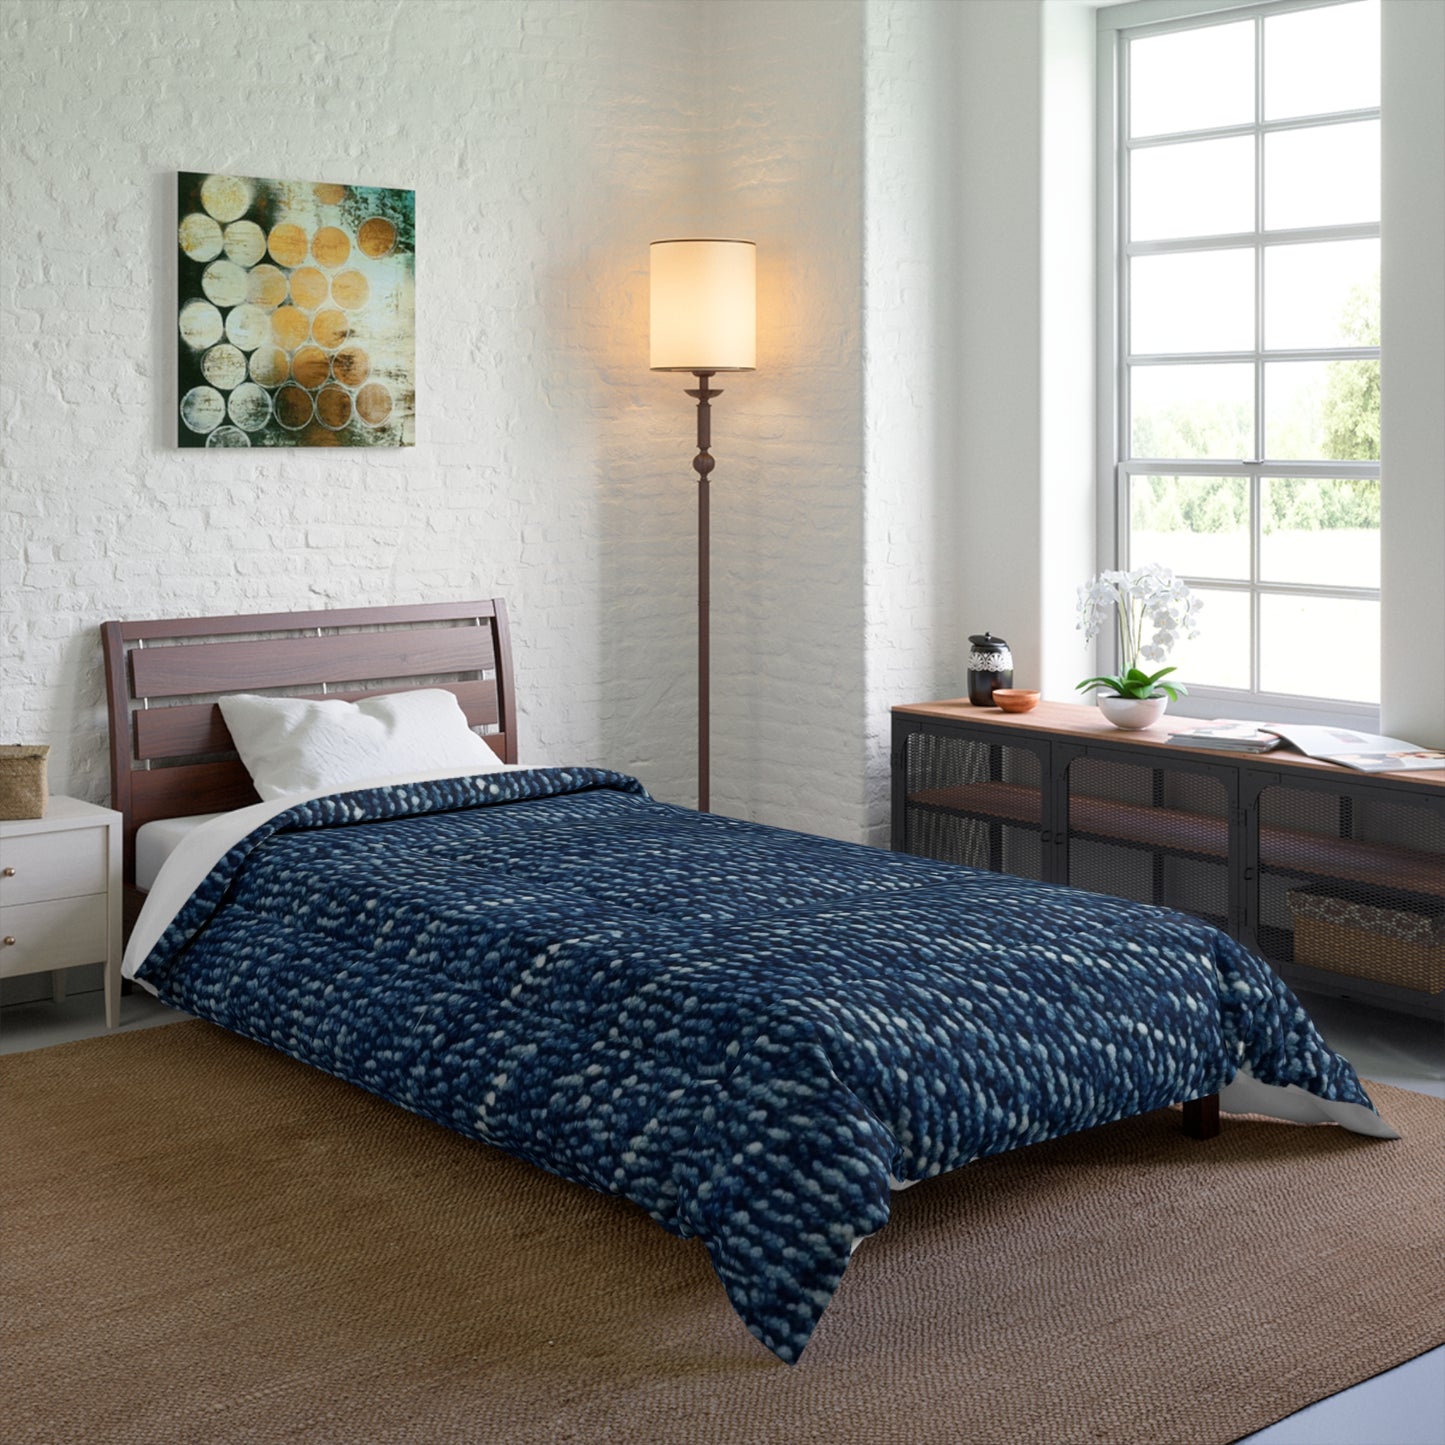 Denim-Inspired Design - Distinct Textured Fabric Pattern - Comforter